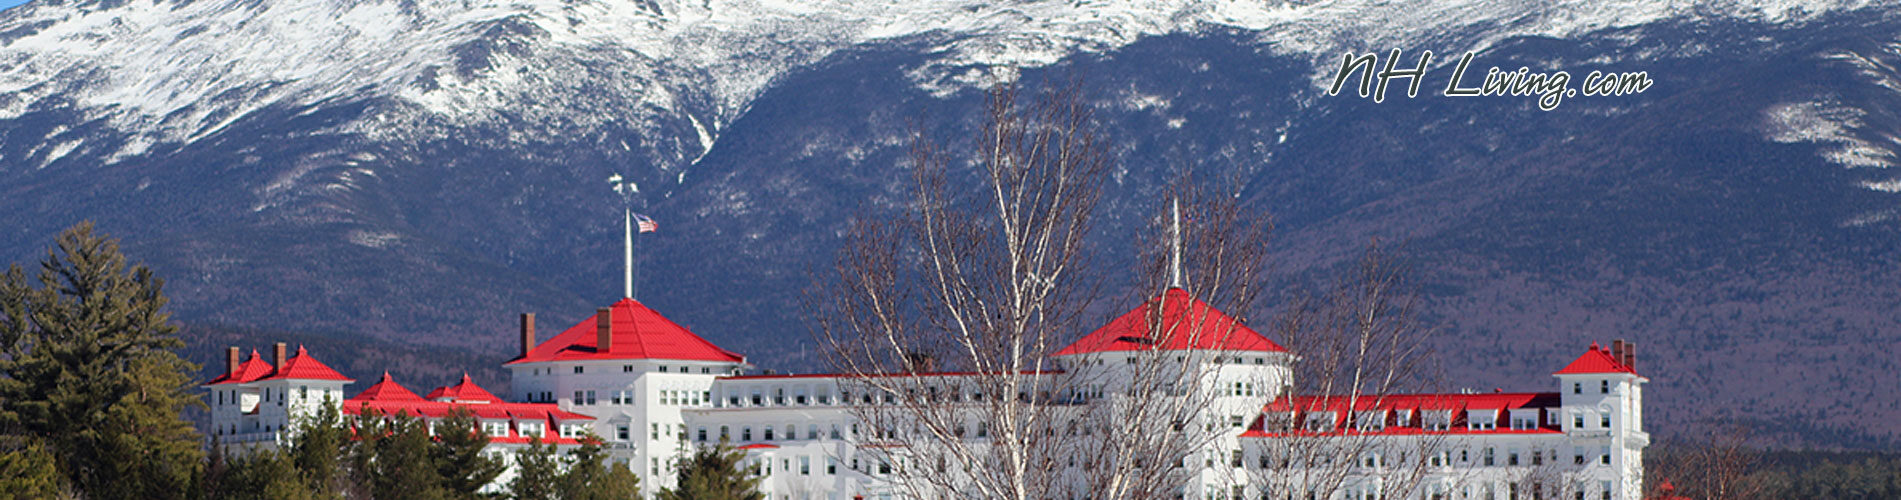 Famous NH Hotel Resort Lodging Accommodations at the Mount Washington Hotel Resort